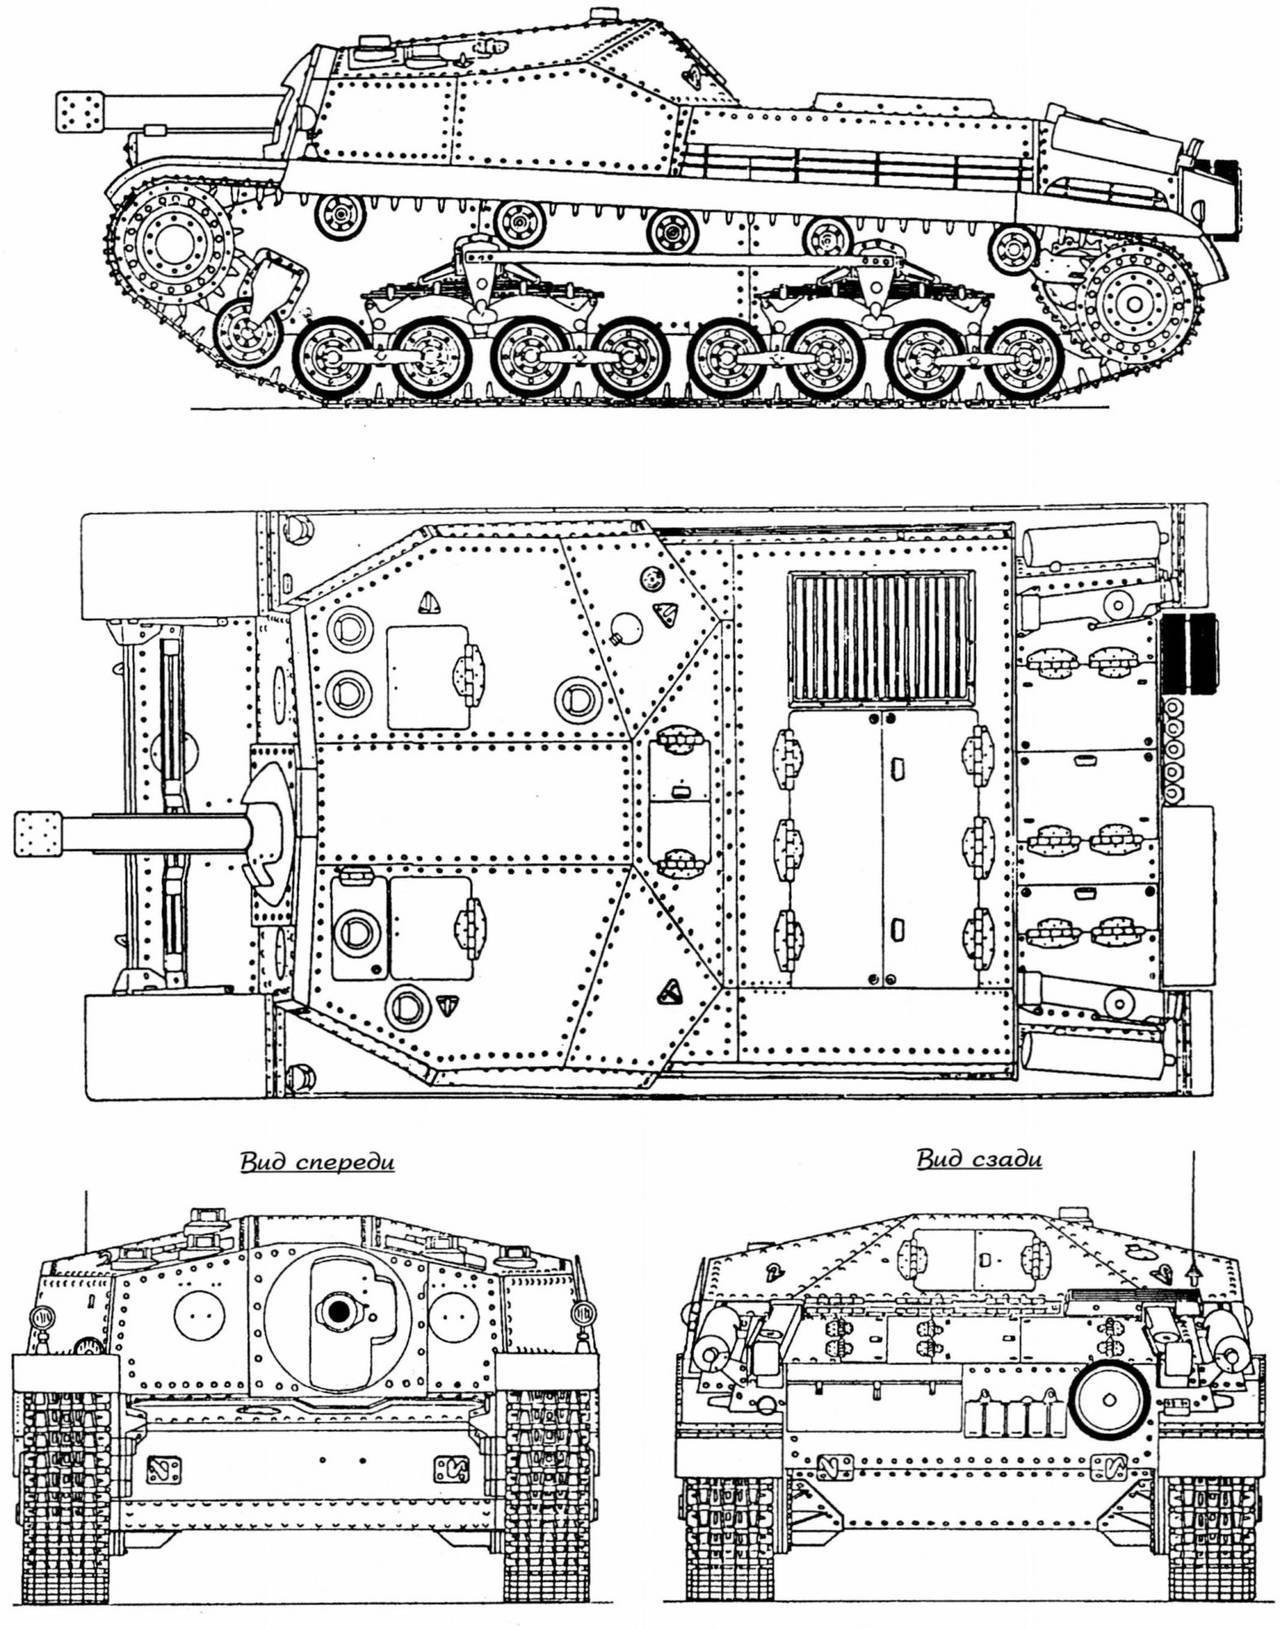 Чертеж танка. Зриньи II. Чертежи танков Германии сбоку. Венгерский средний танк 41m Turan II. Танки Германии второй мировой войны чертежи.